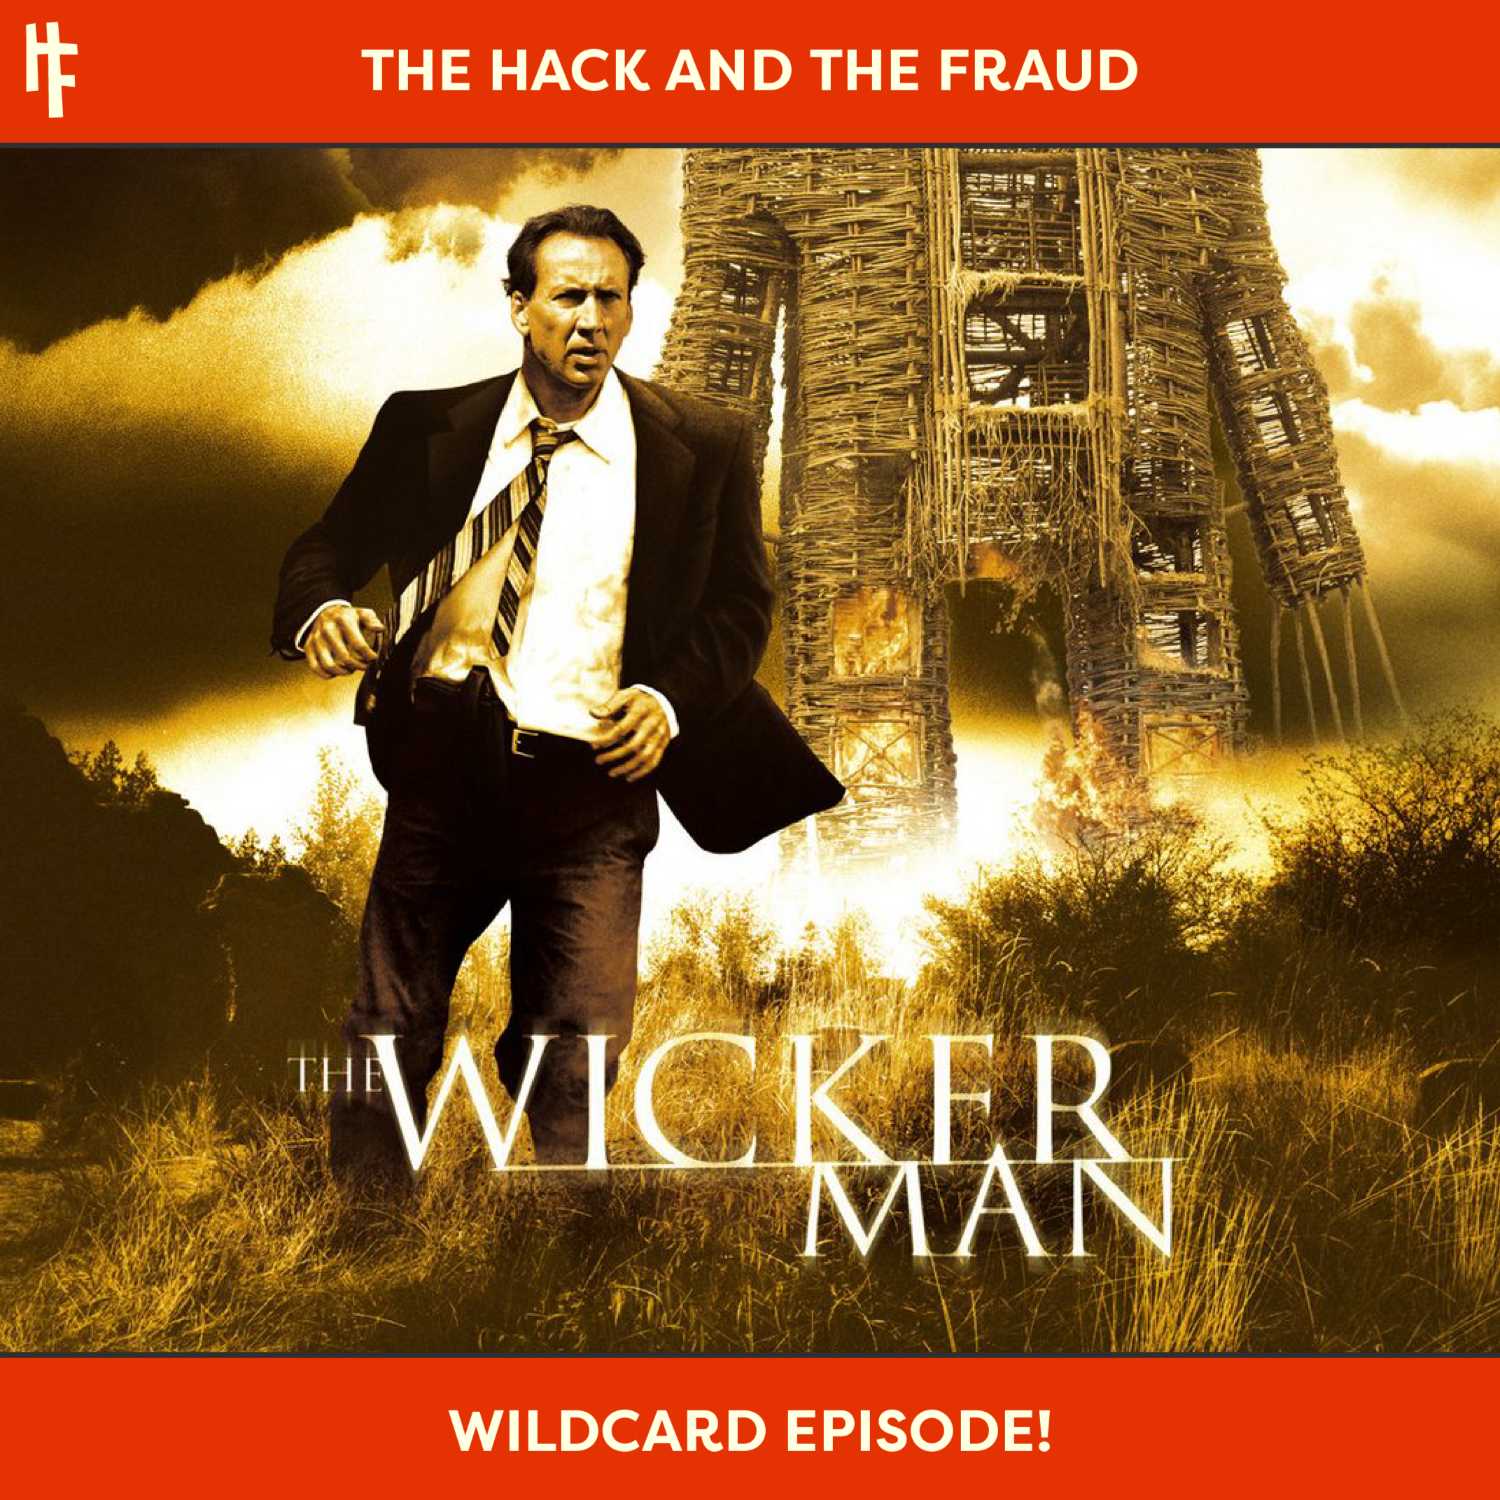 Wildcard Episode - The Wicker Man